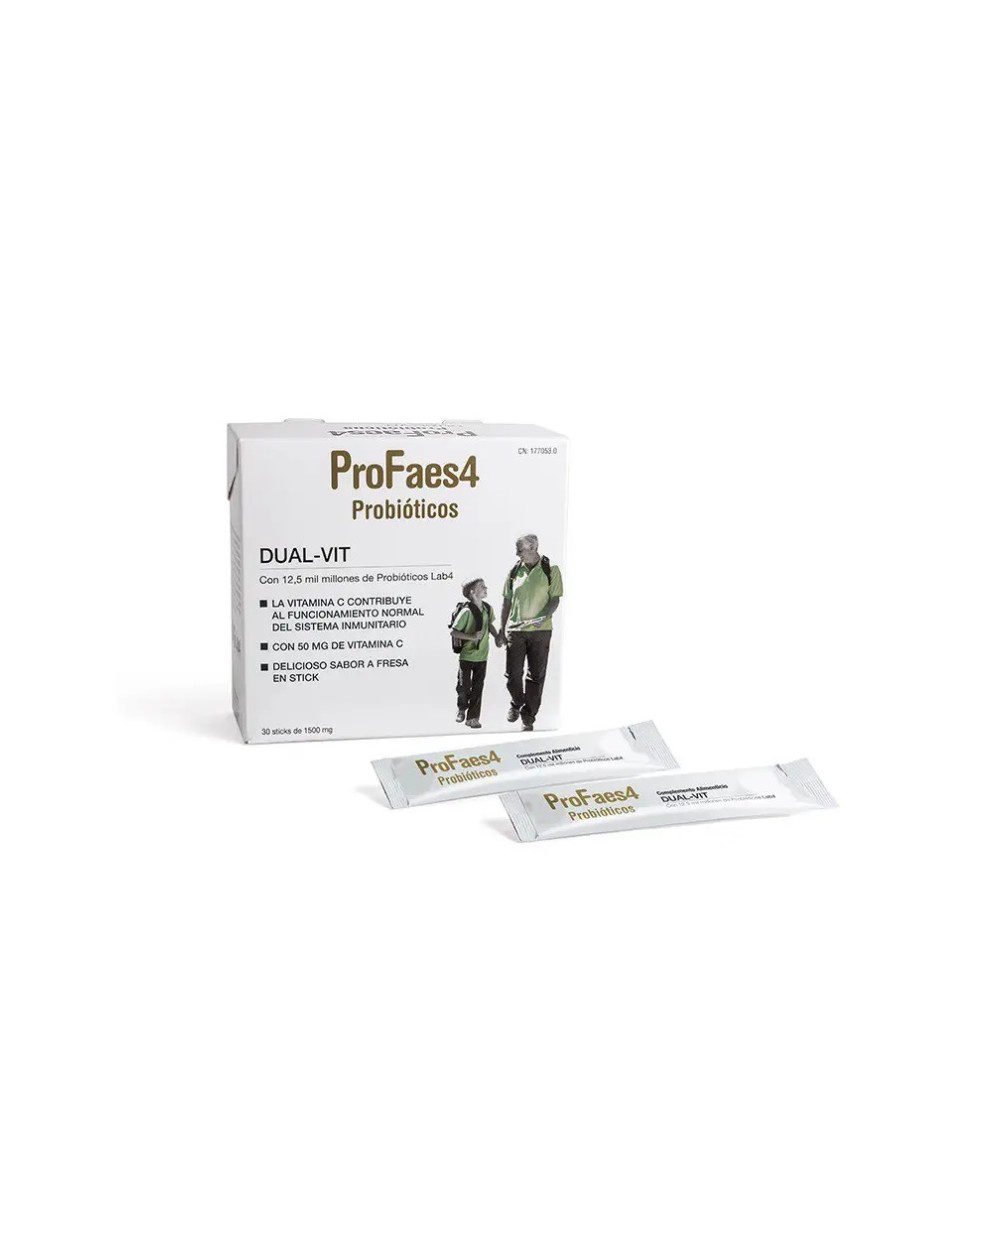 ProFaes4 Dual Vit - Probióticos 30sticks